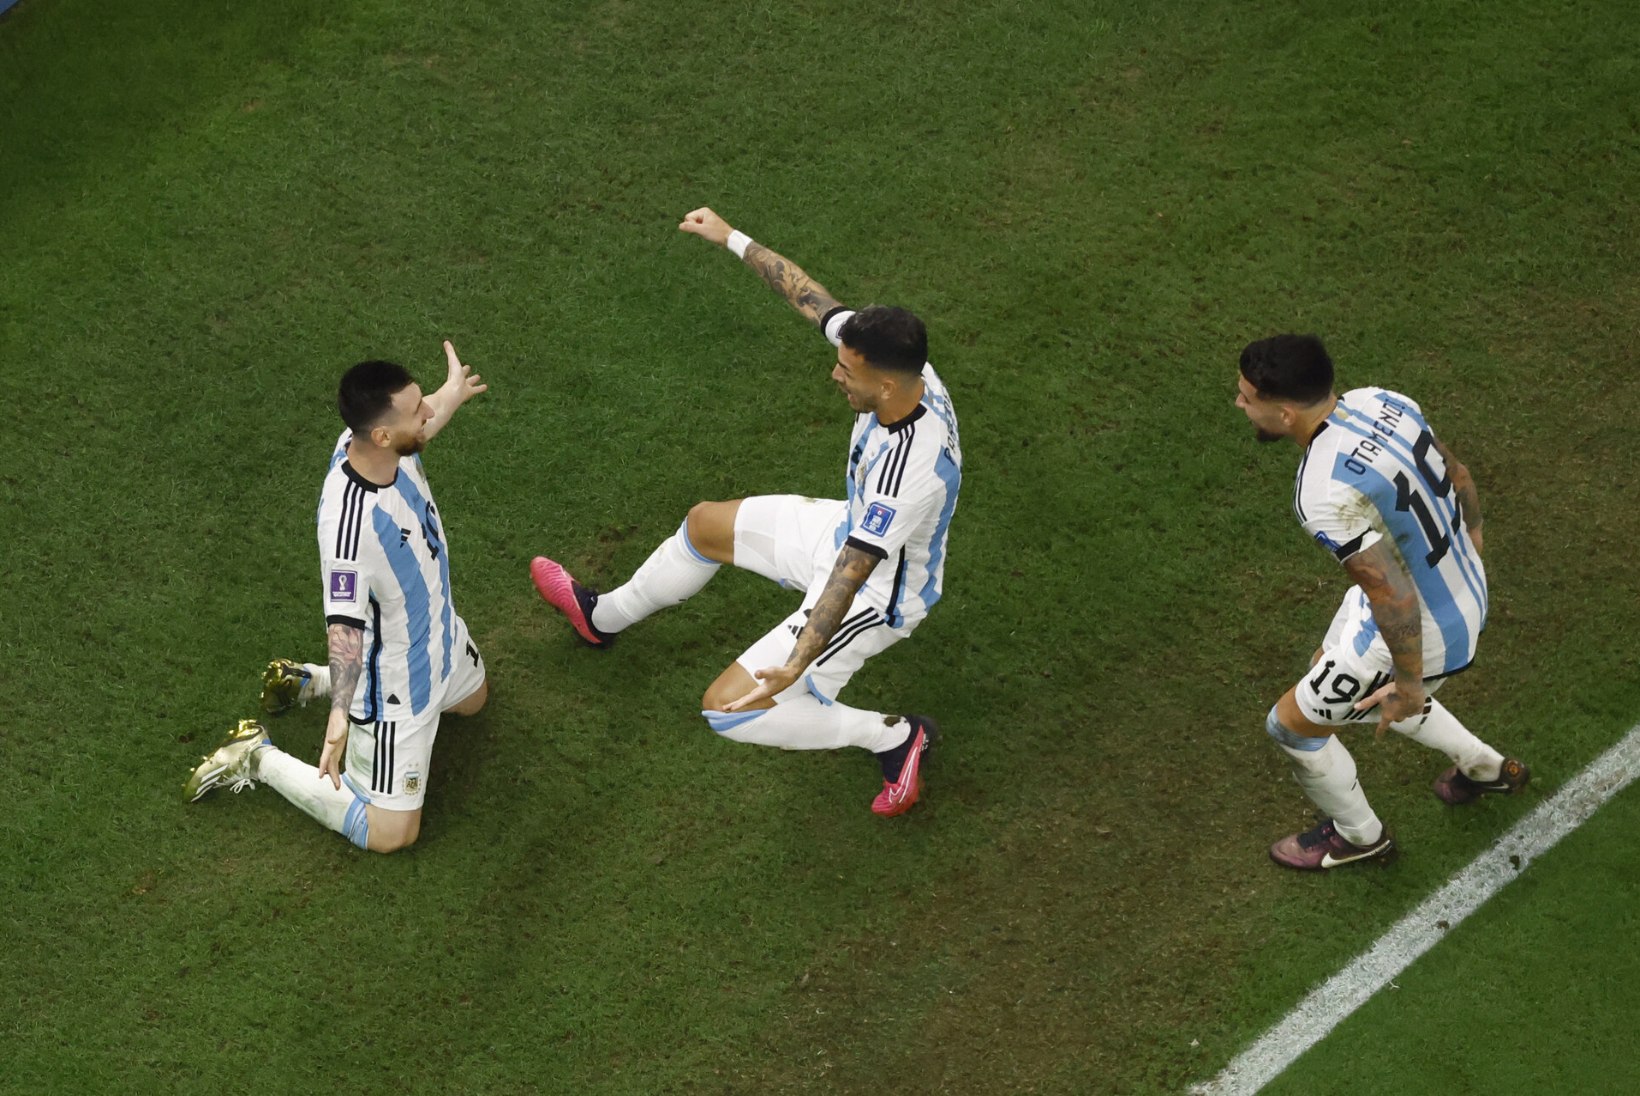 MM-FINAALI BLOGI | Argentina tegi Lionel Messist maailmameistri!